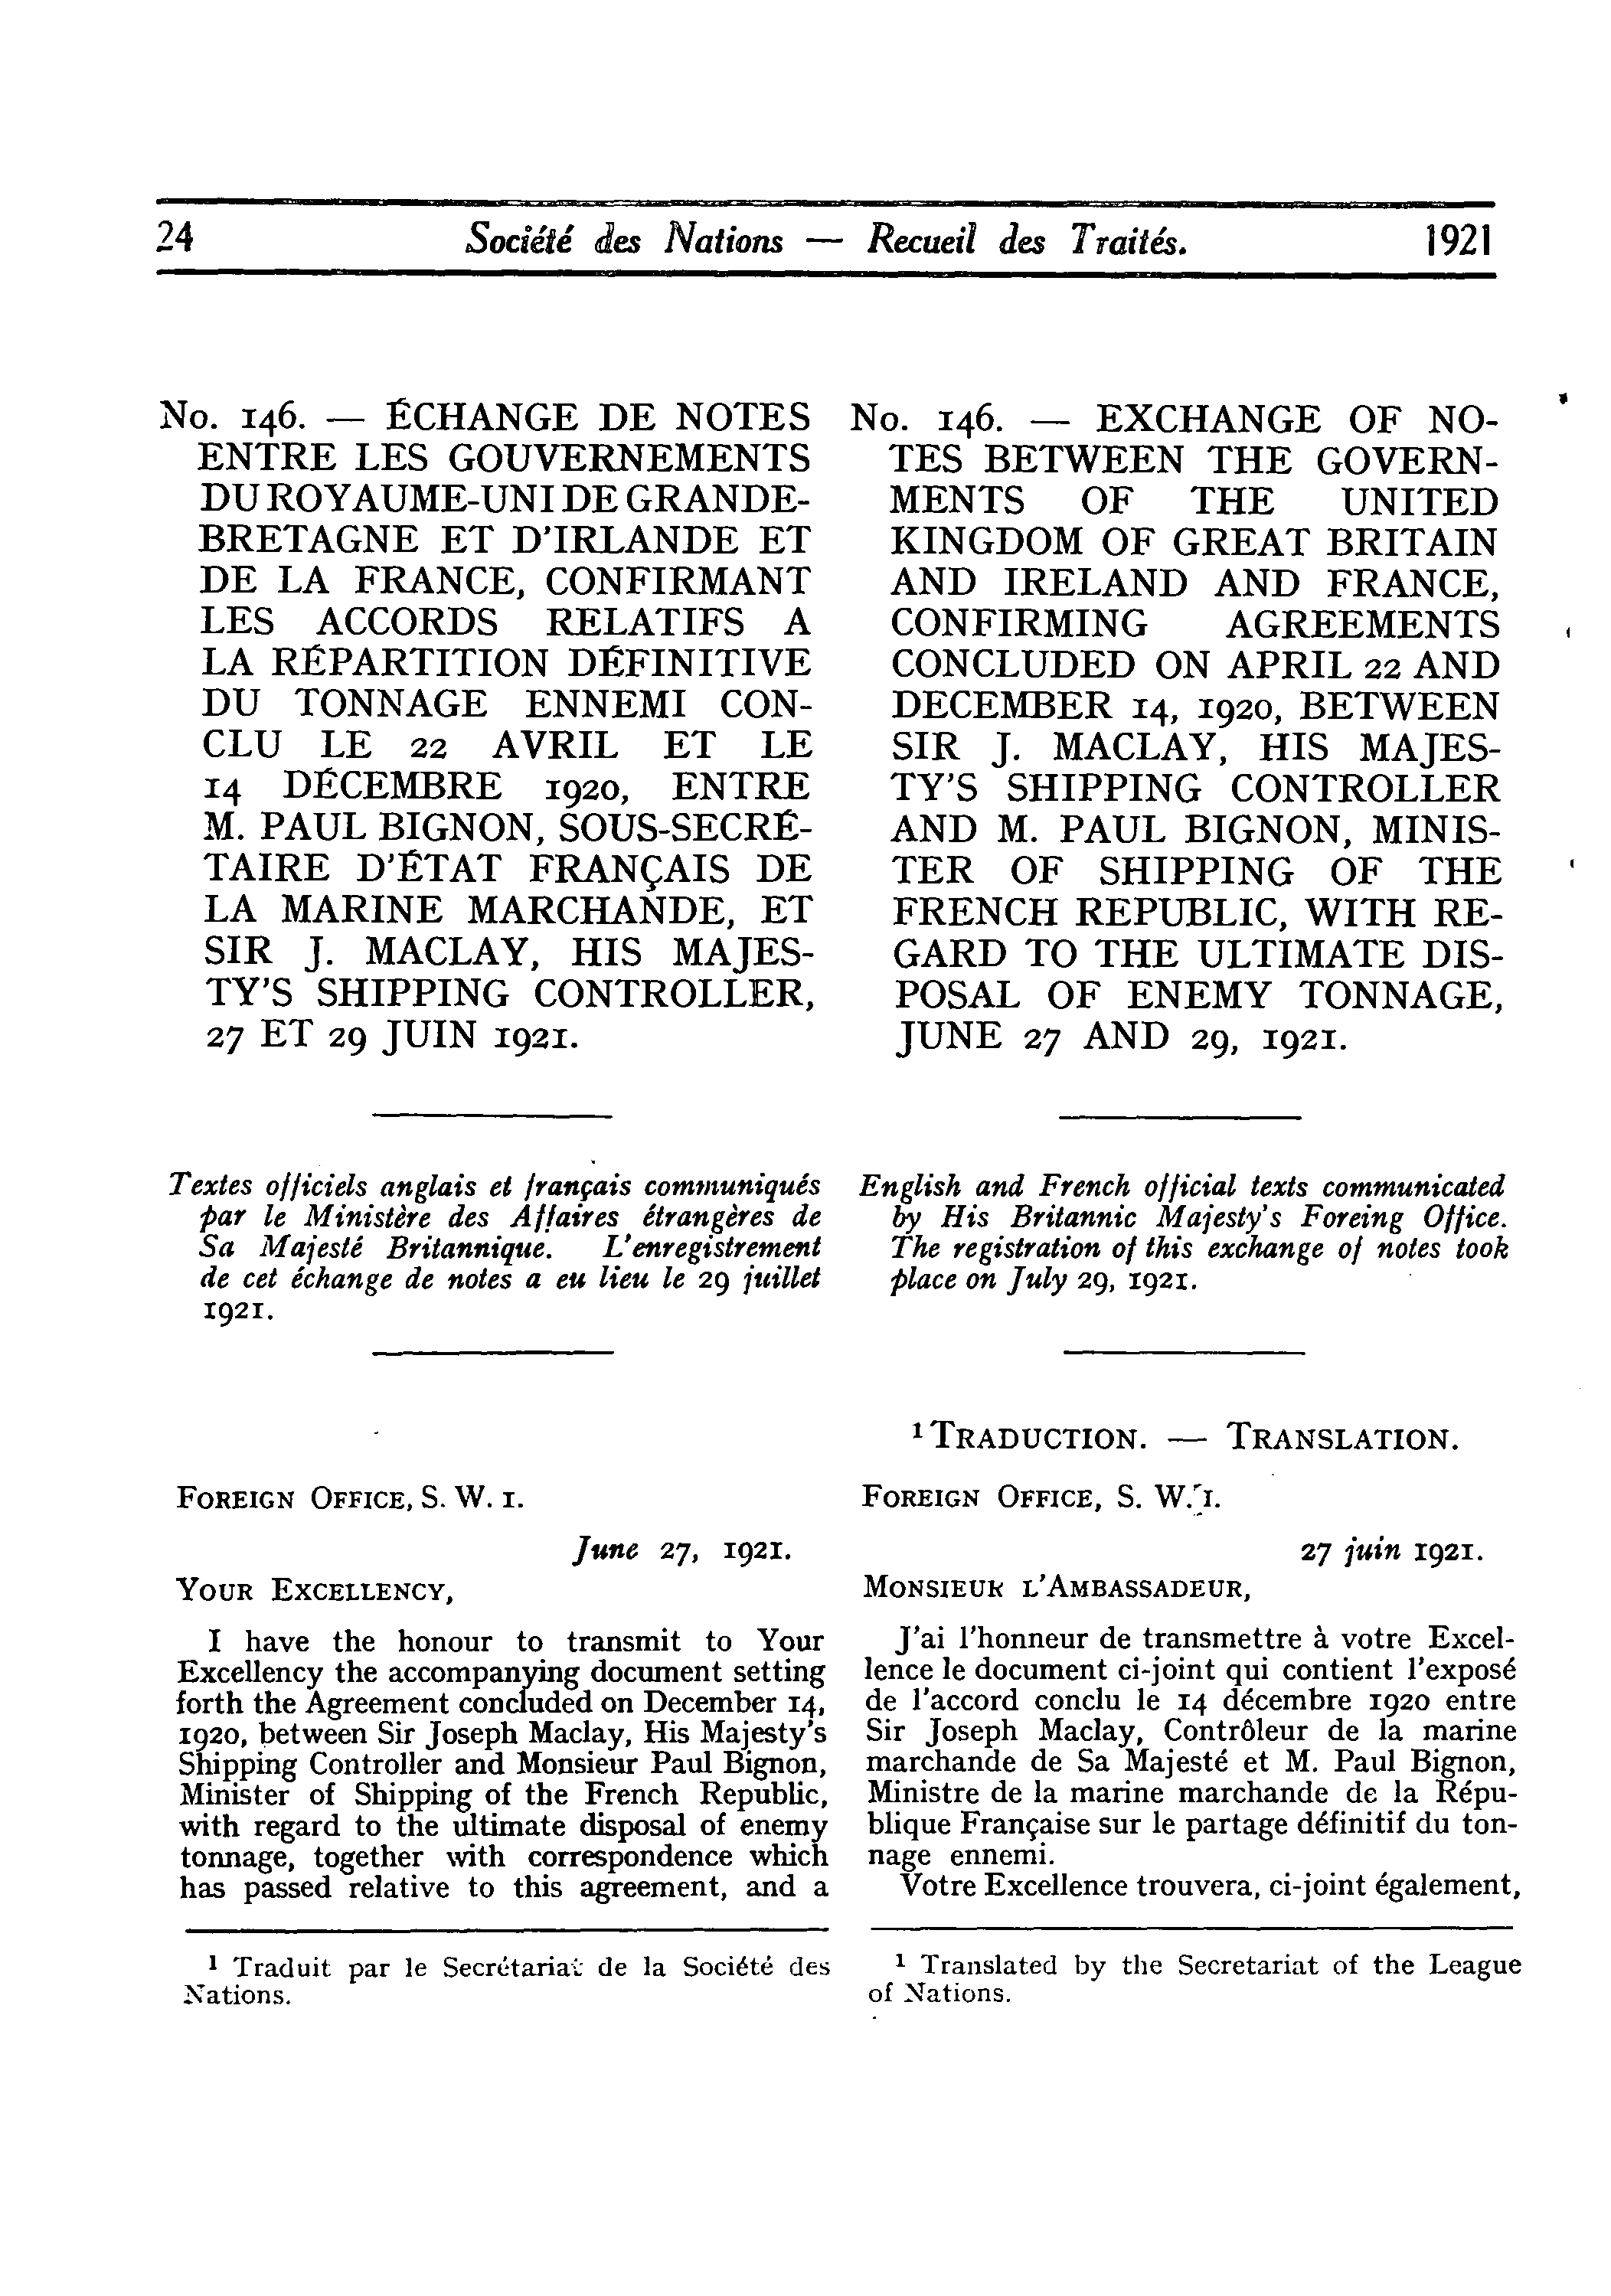 24 Socifj' des Nations - Recuei des Traits. 1921 No. 146.